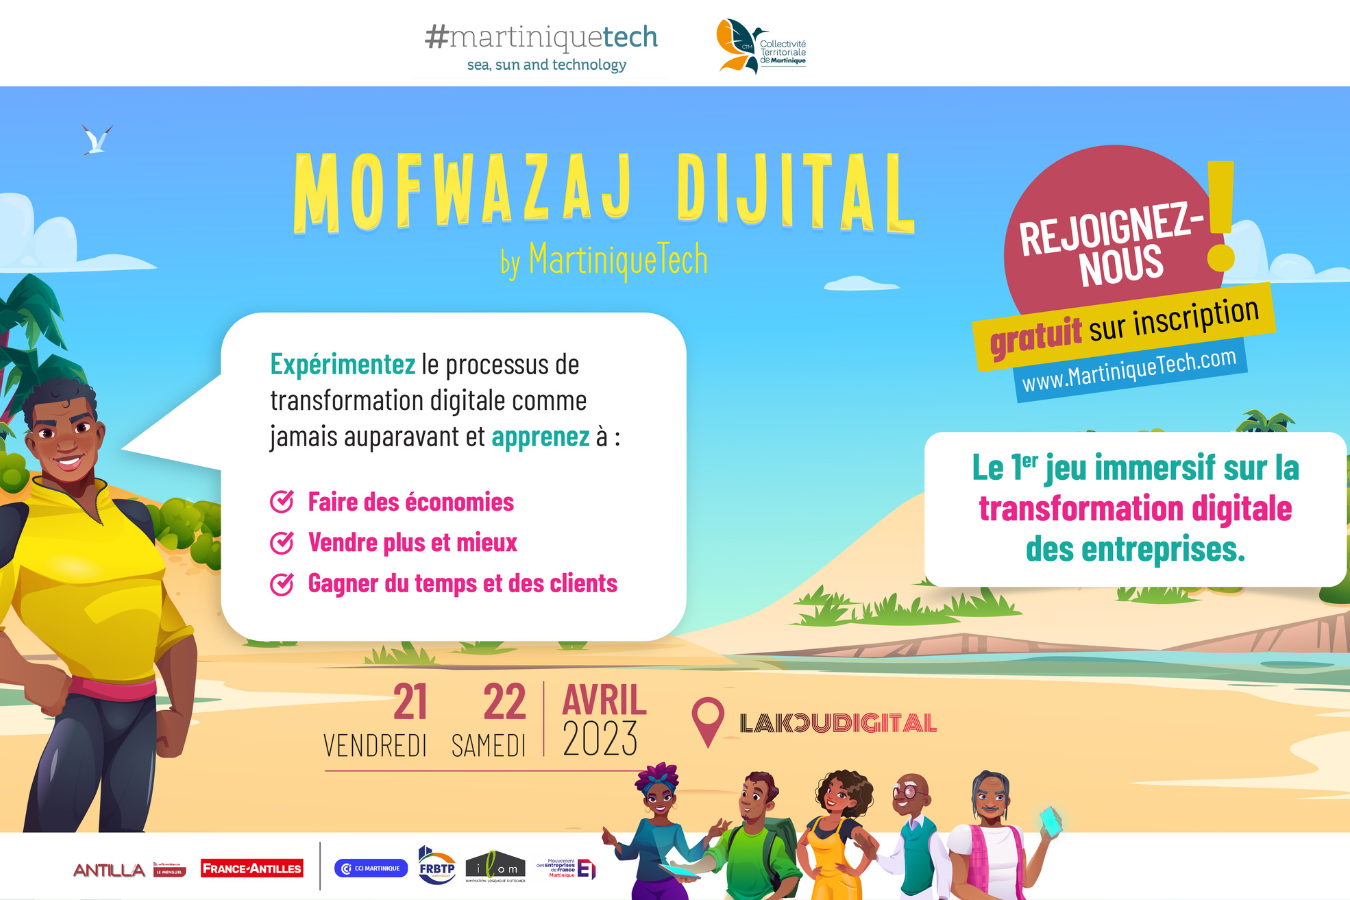 Mofwazaj digital by MartiniqueTech